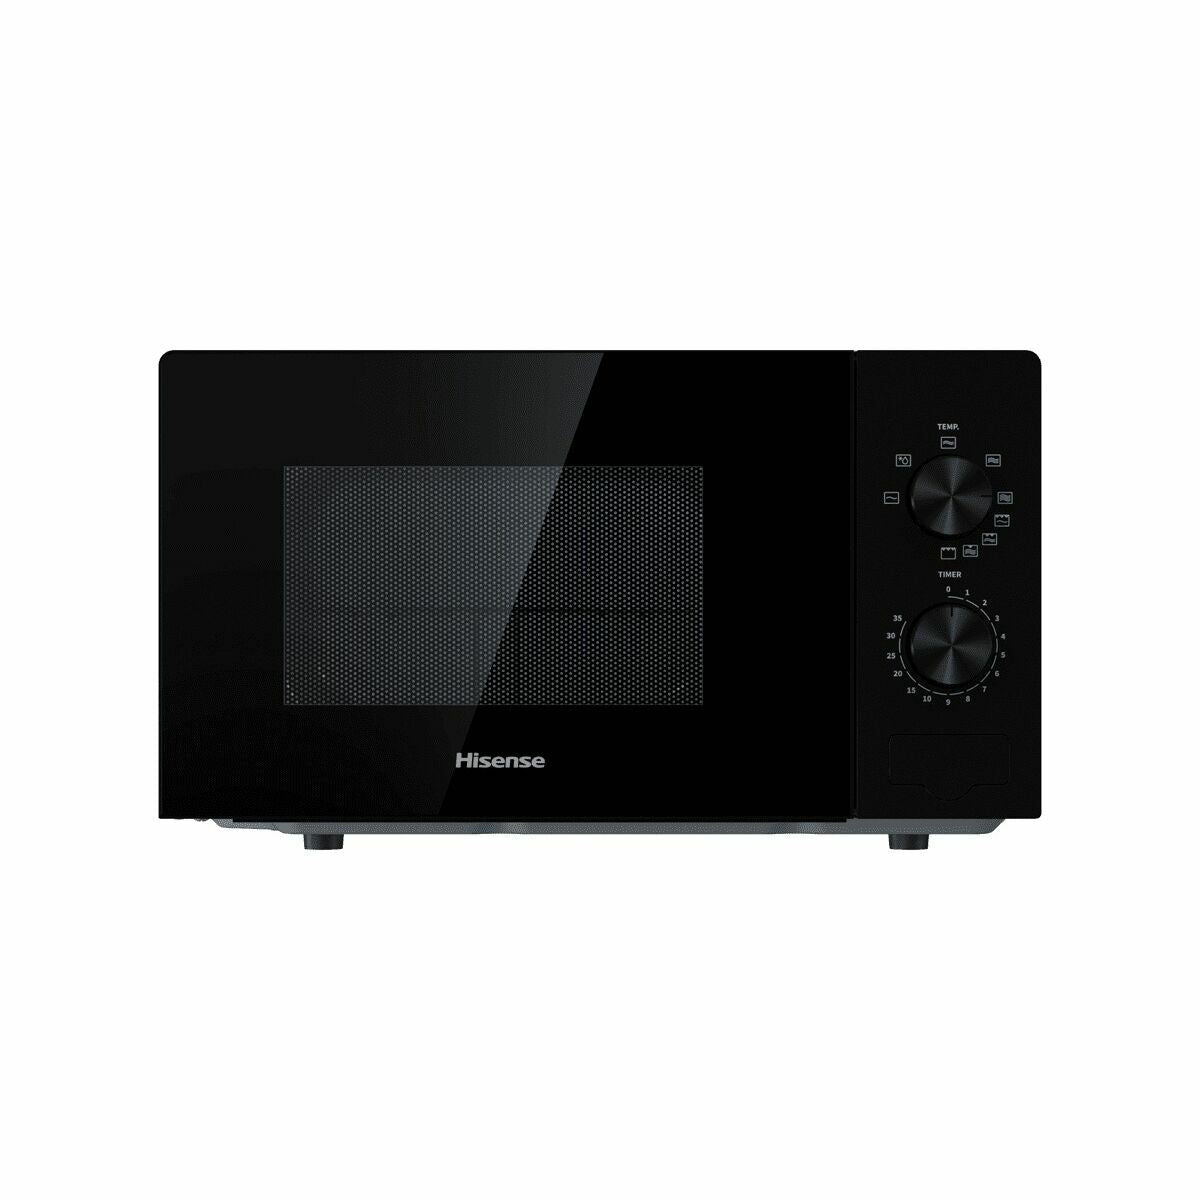 Microwave Hisense H20MOBP1G Black 700 W 20 L (Refurbished B)